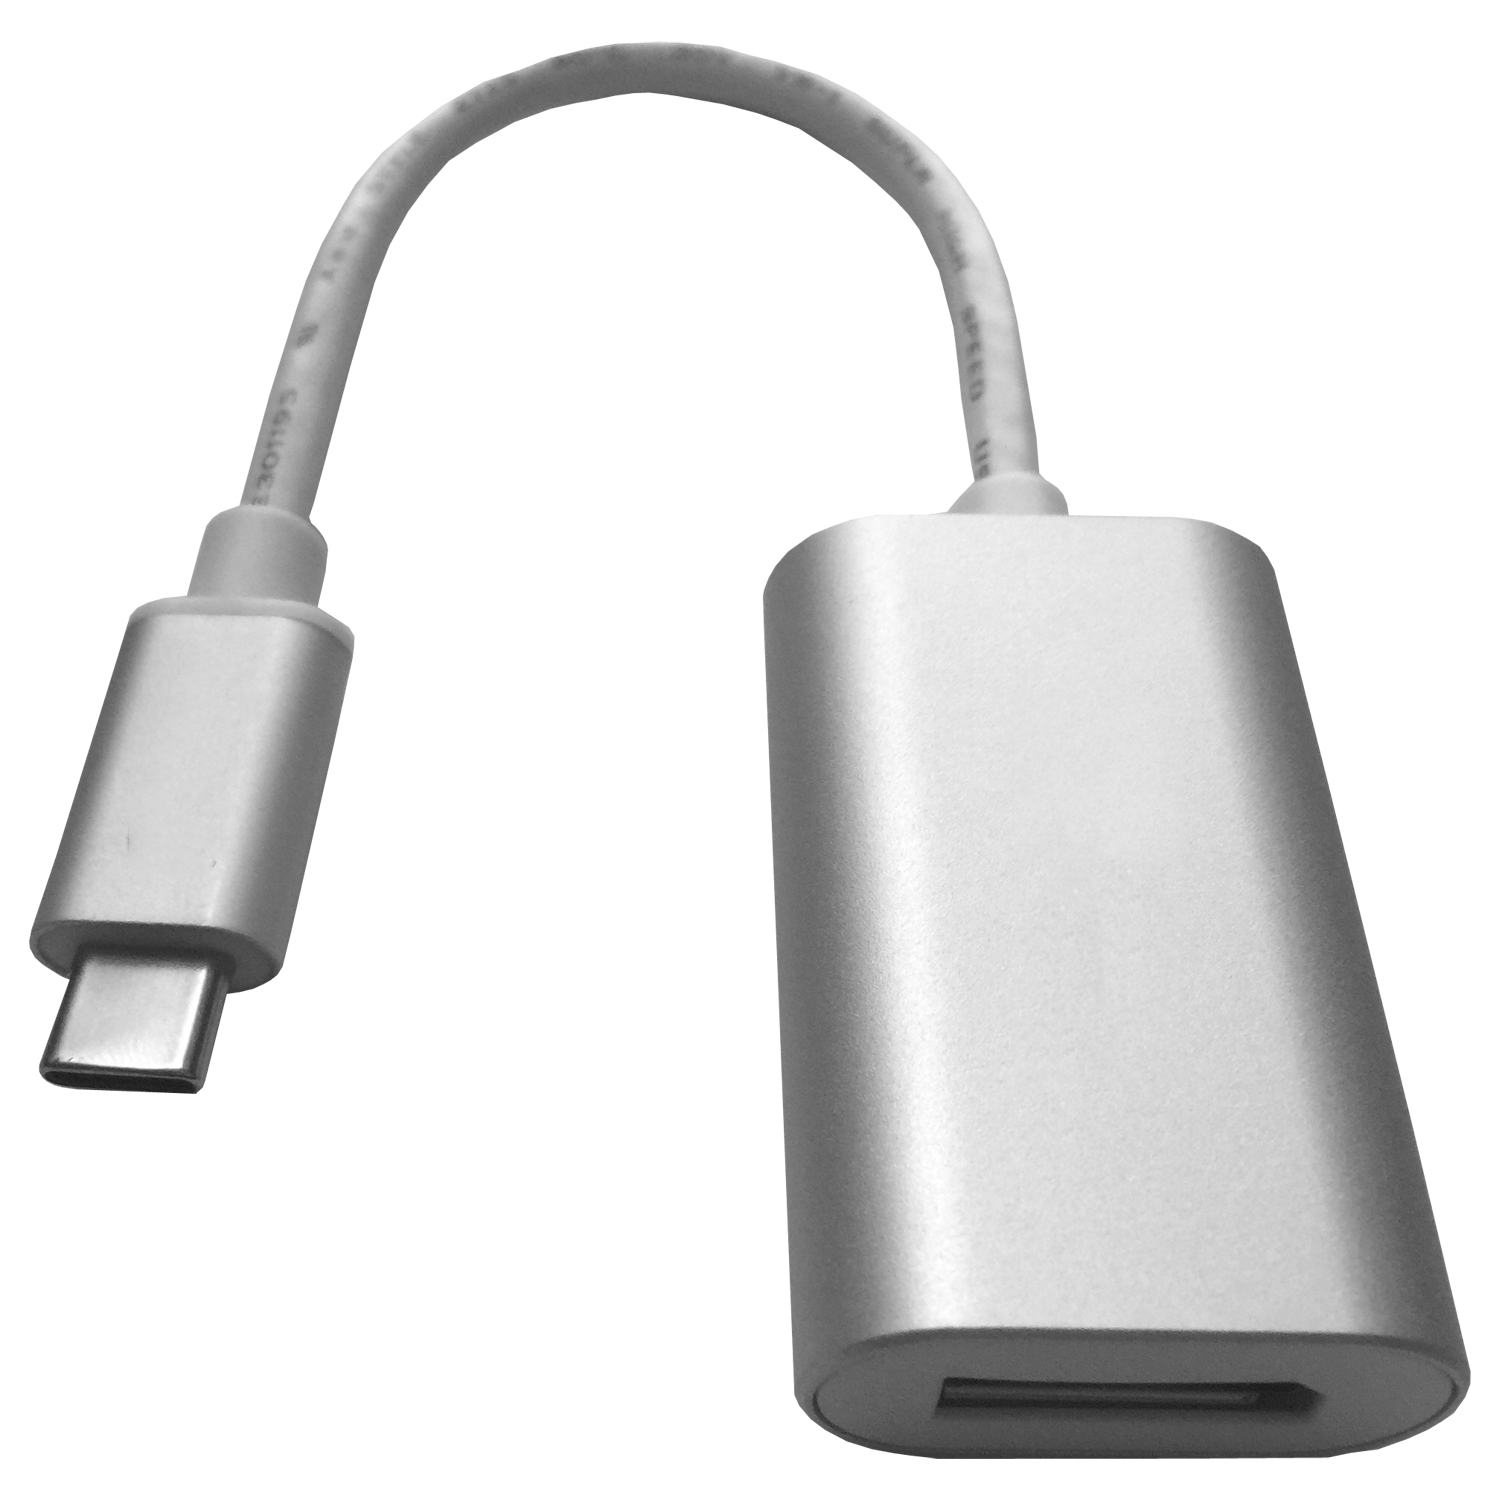 Cáp chuyển Thunderbolt 3 ra Displayport cho Macbook - TTD0549